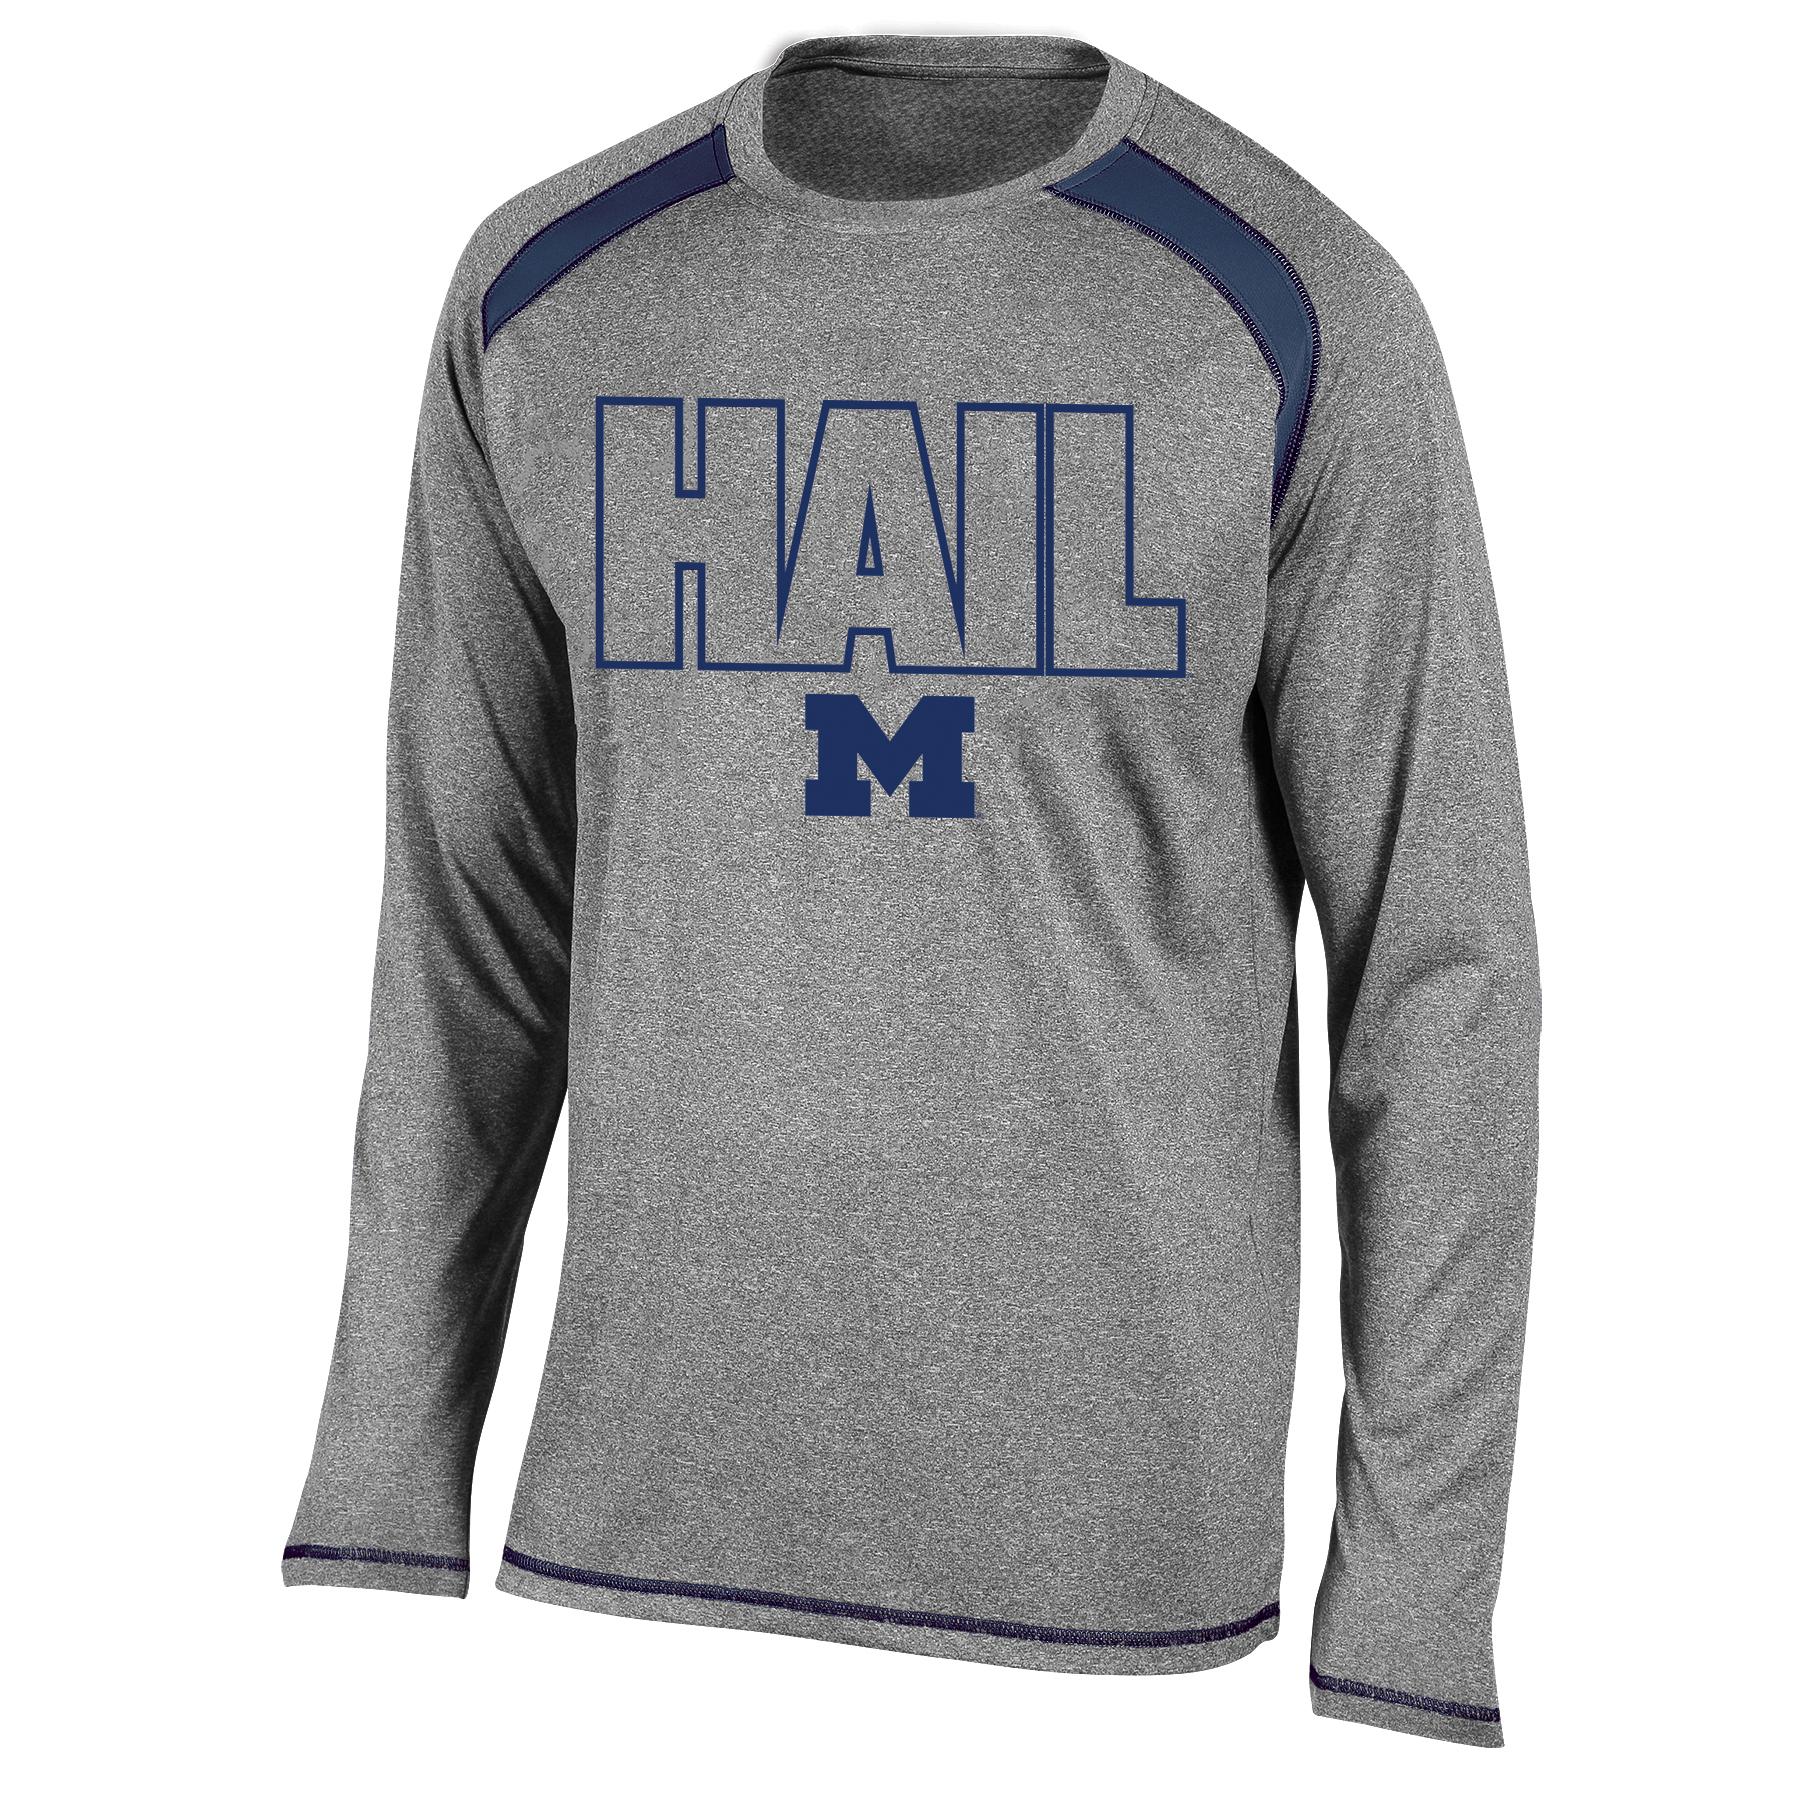 NCAA Men's Big & Tall Athletic Shirt - University of Michigan Wolverines